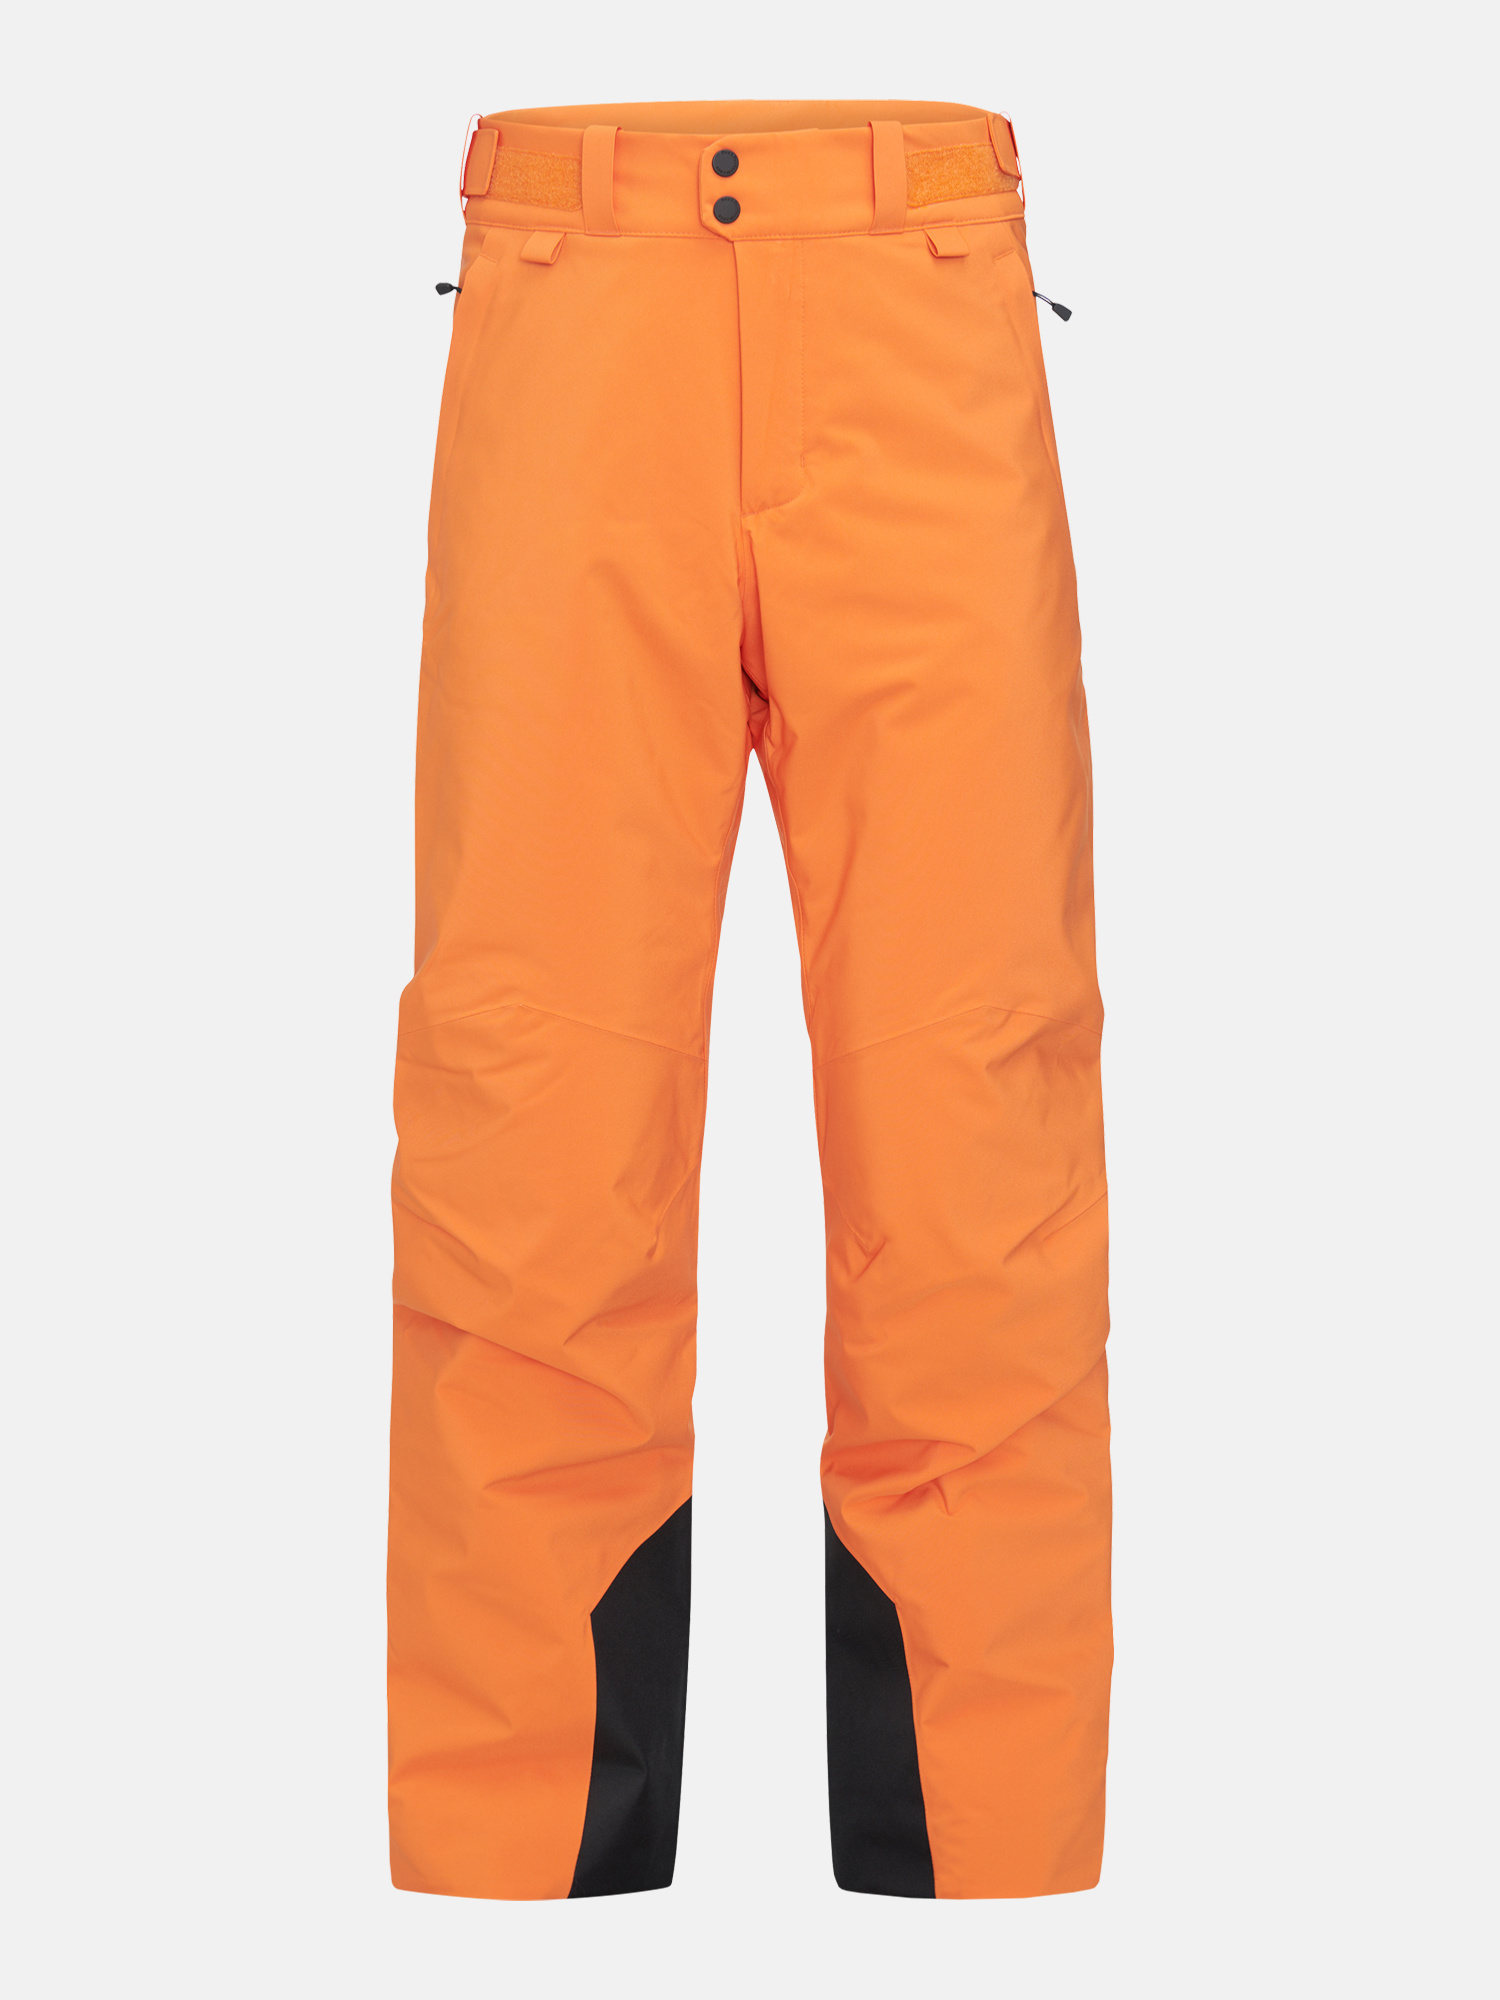 Assimileren Inzichtelijk partij Peak Performance Men's Maroon Pant – Orange Altitude - Free Style Sport